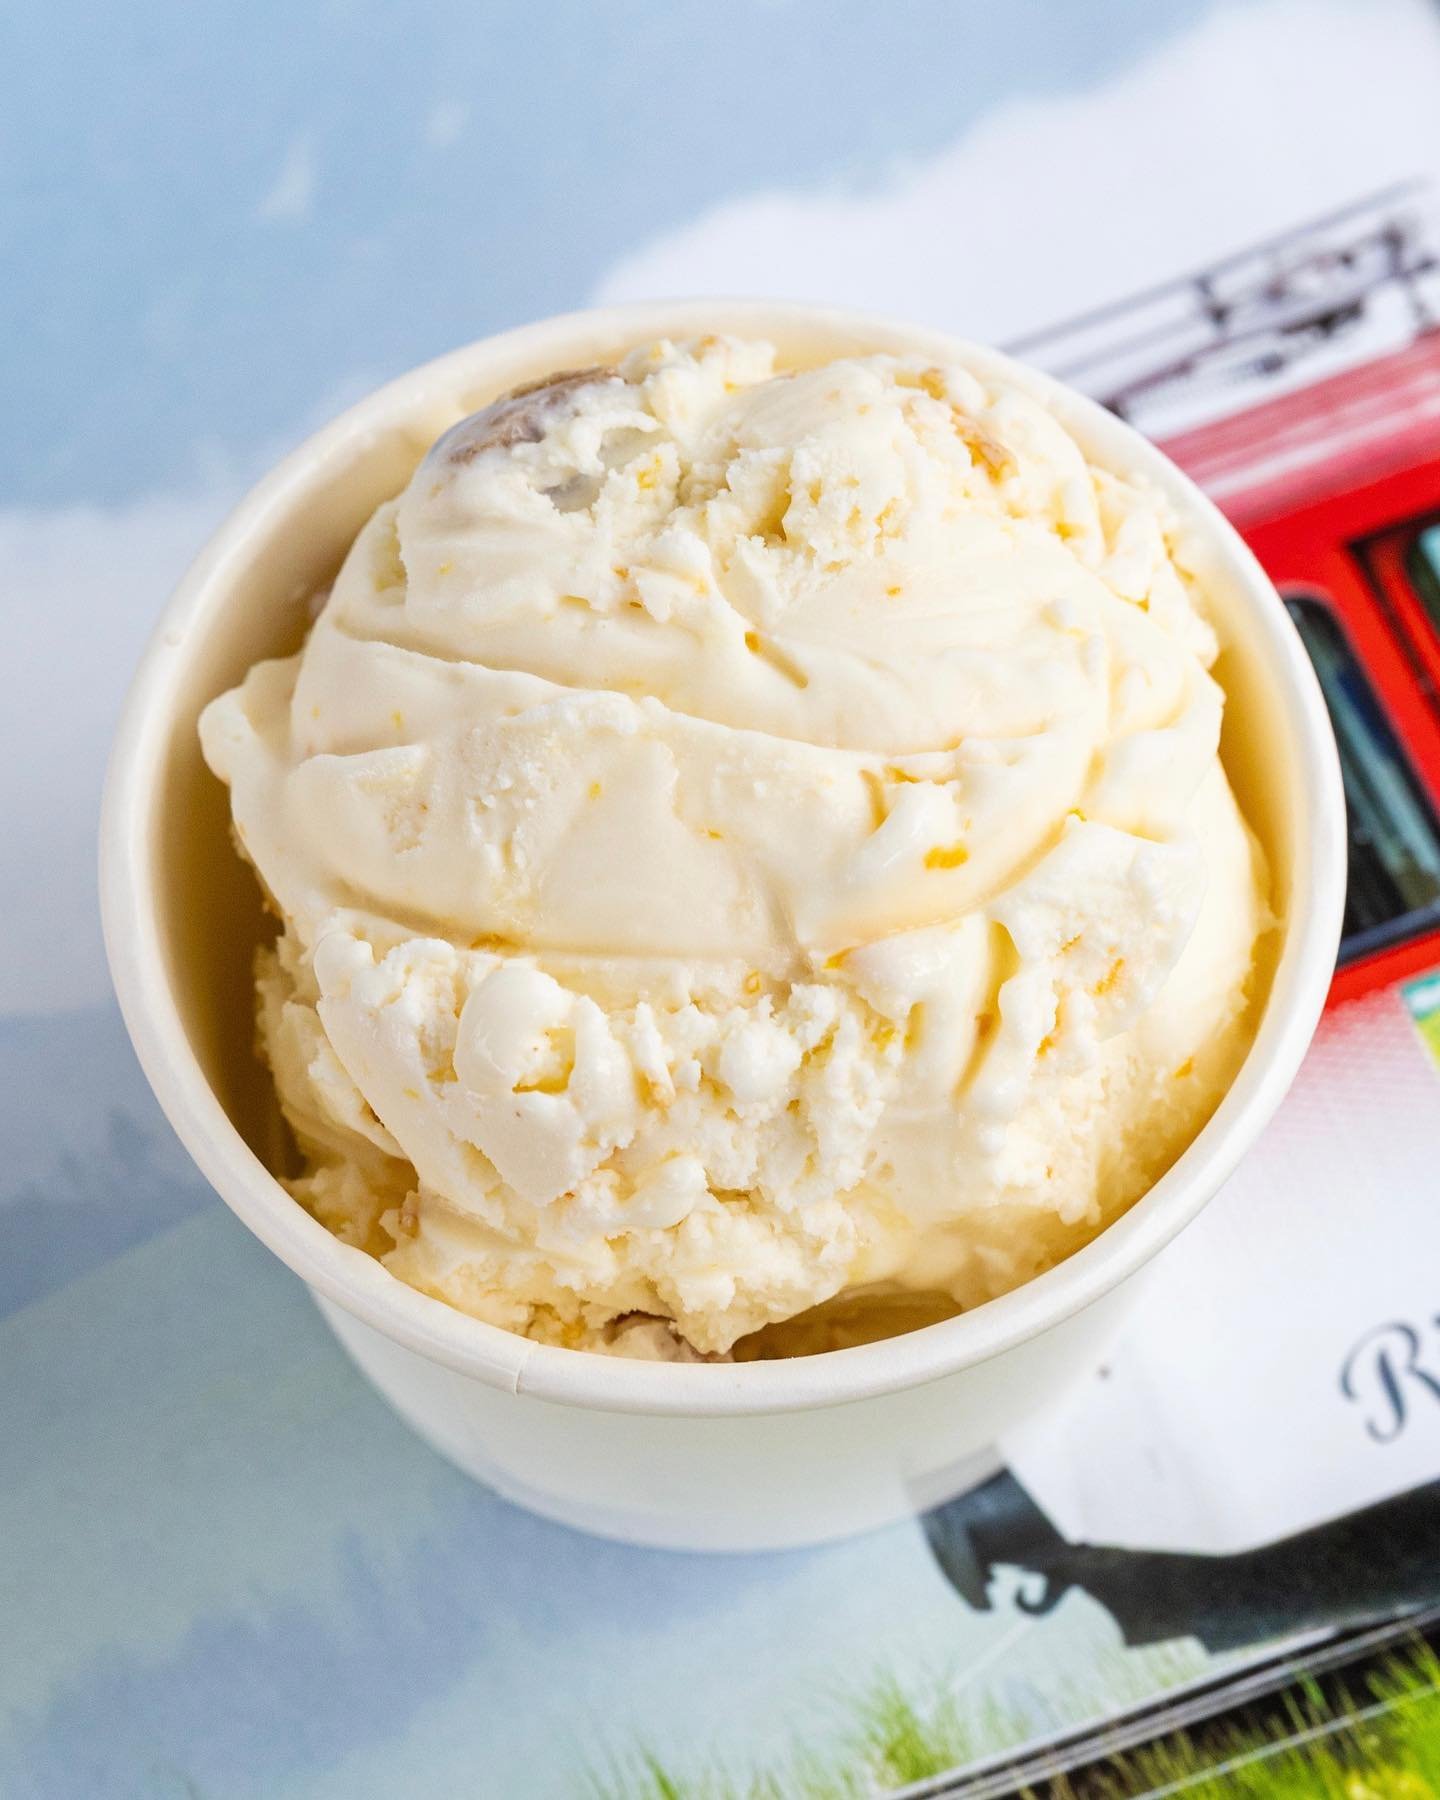 Lemon Cream Pie🍋 Made of Meyer and Lisbon lemon, graham cracker crust, and lemon curd. Limited availability!